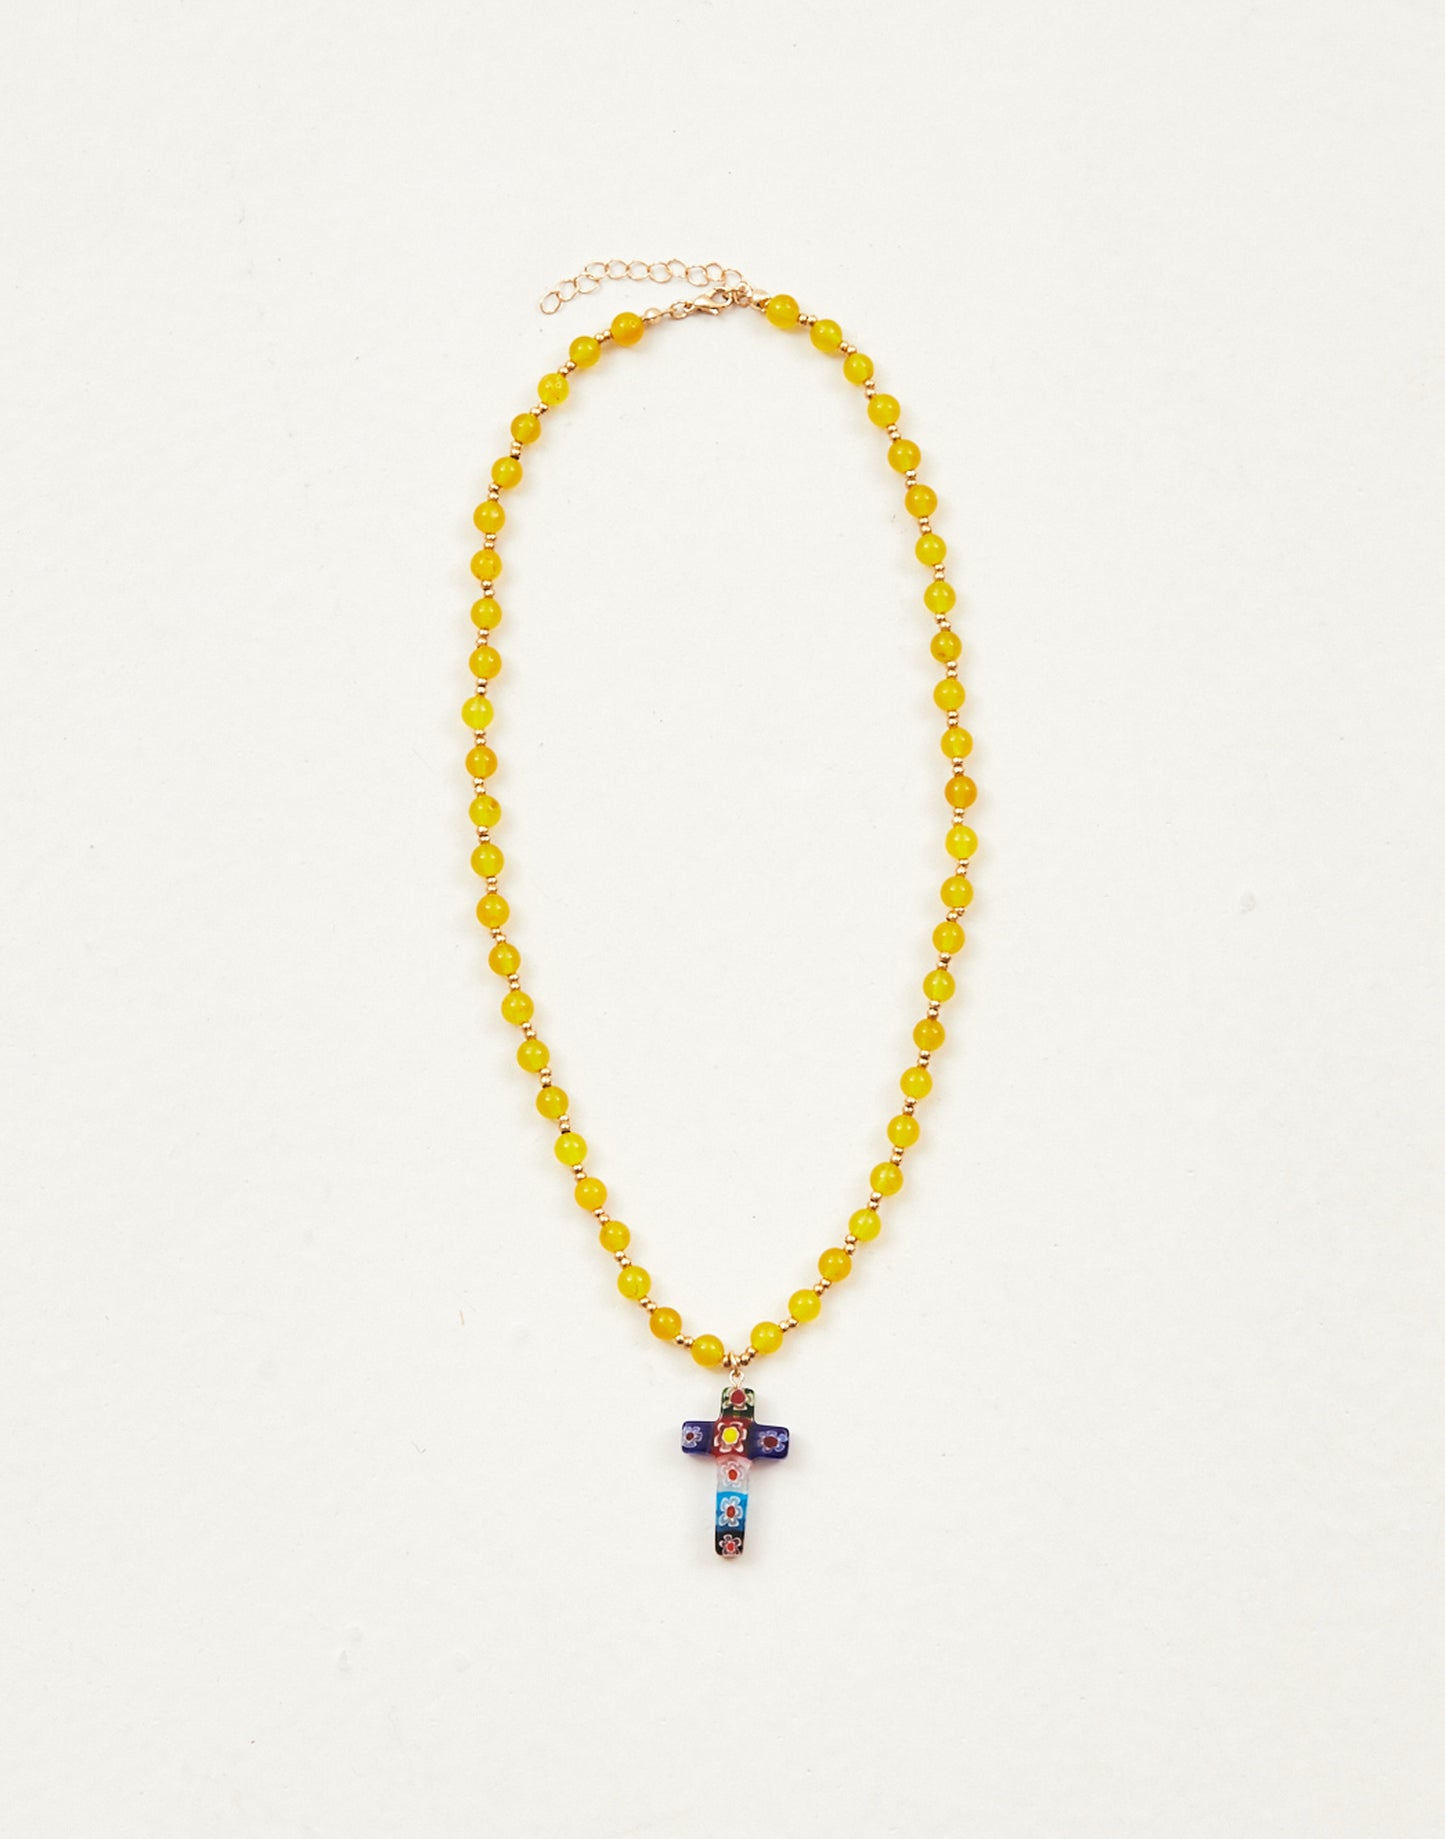 Multicolored Cross Necklace